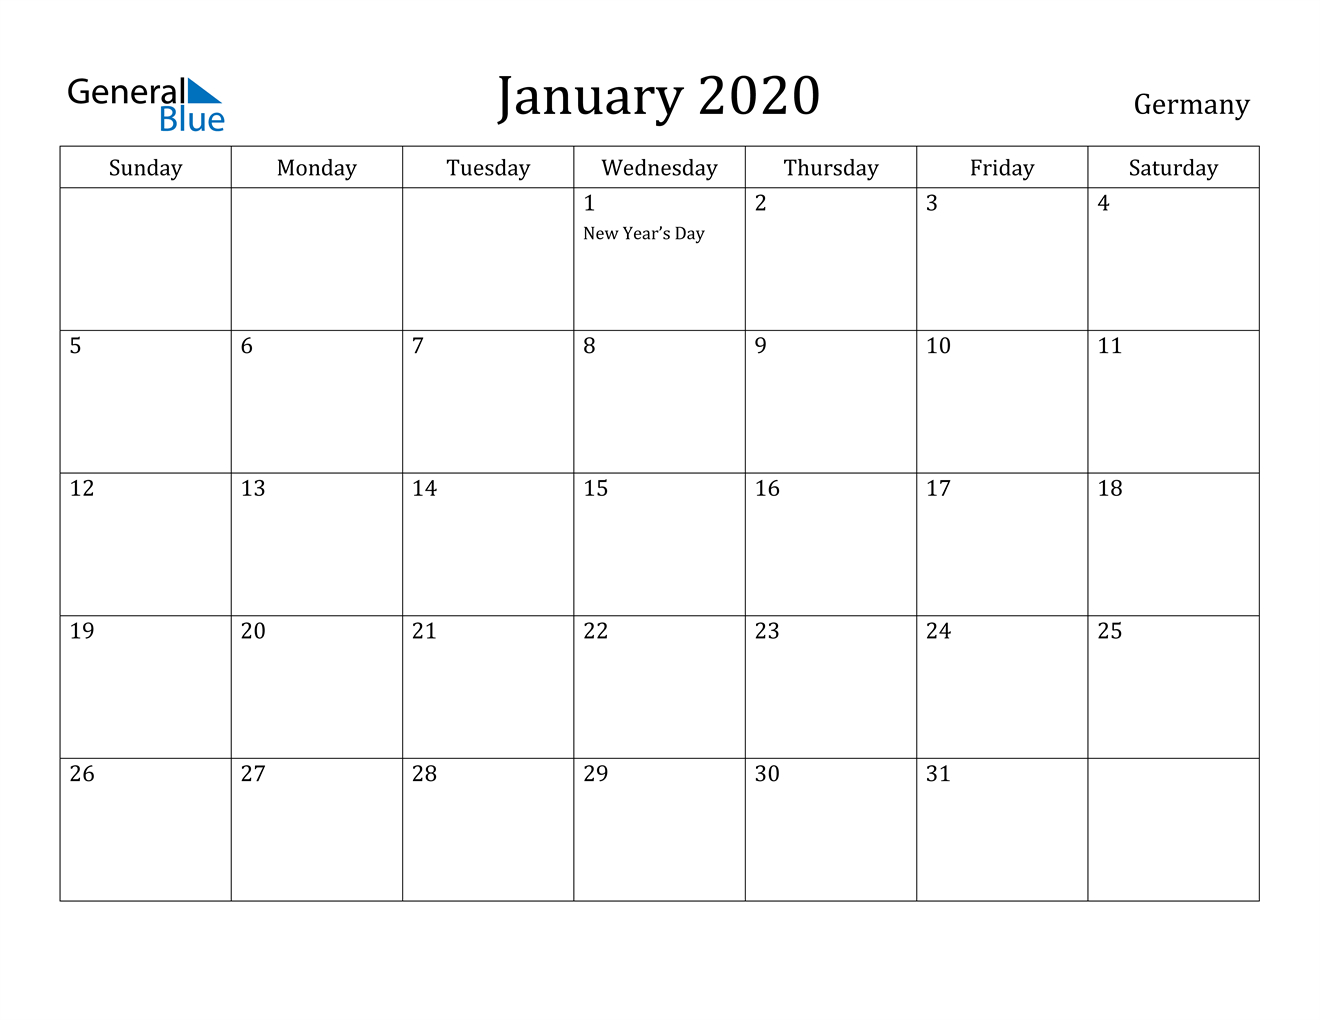 January 2020 Calendar - Germany